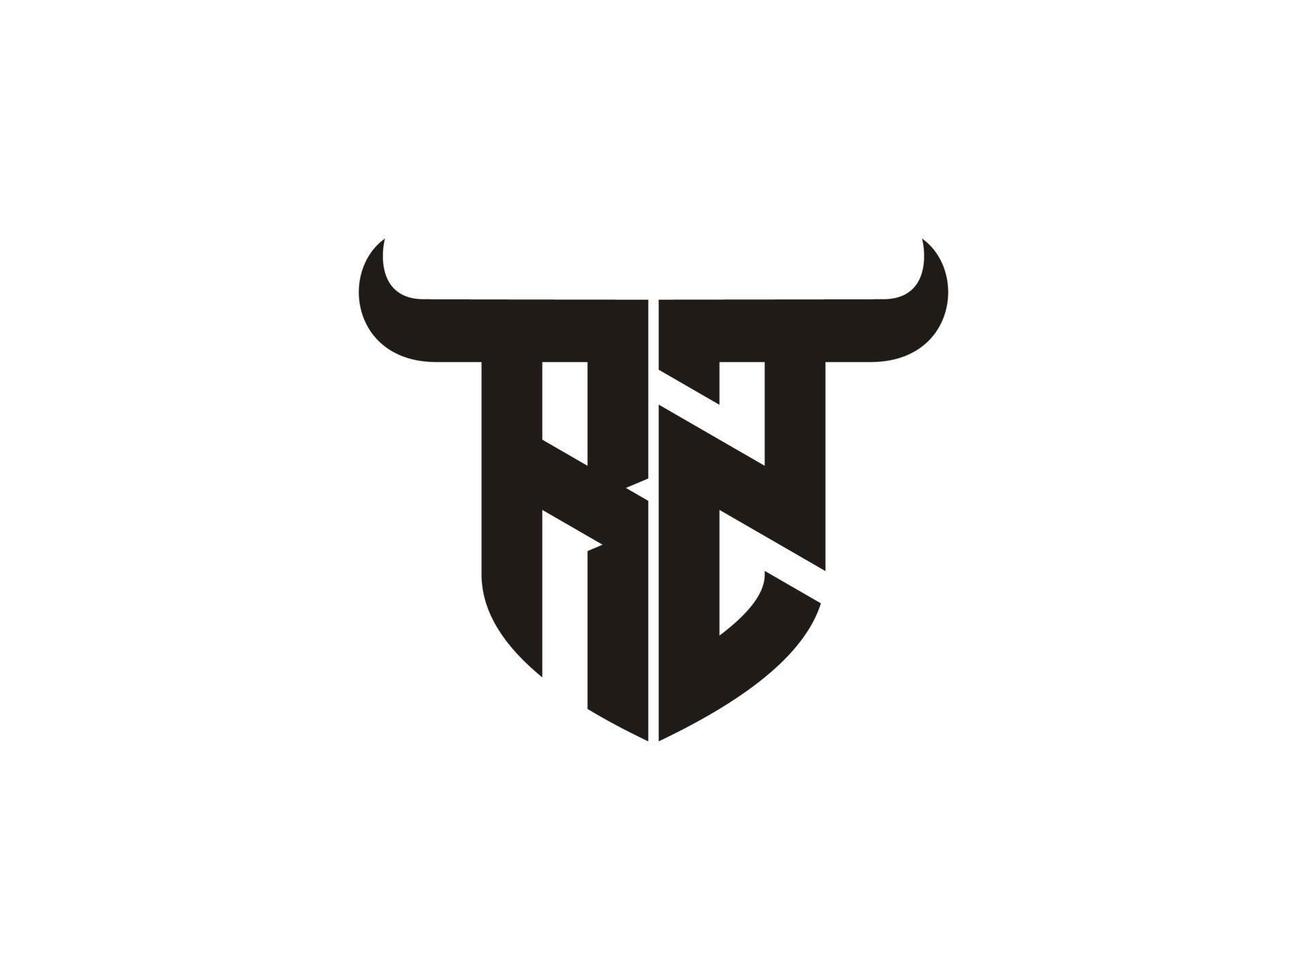 anfängliches rz bull logo design. vektor